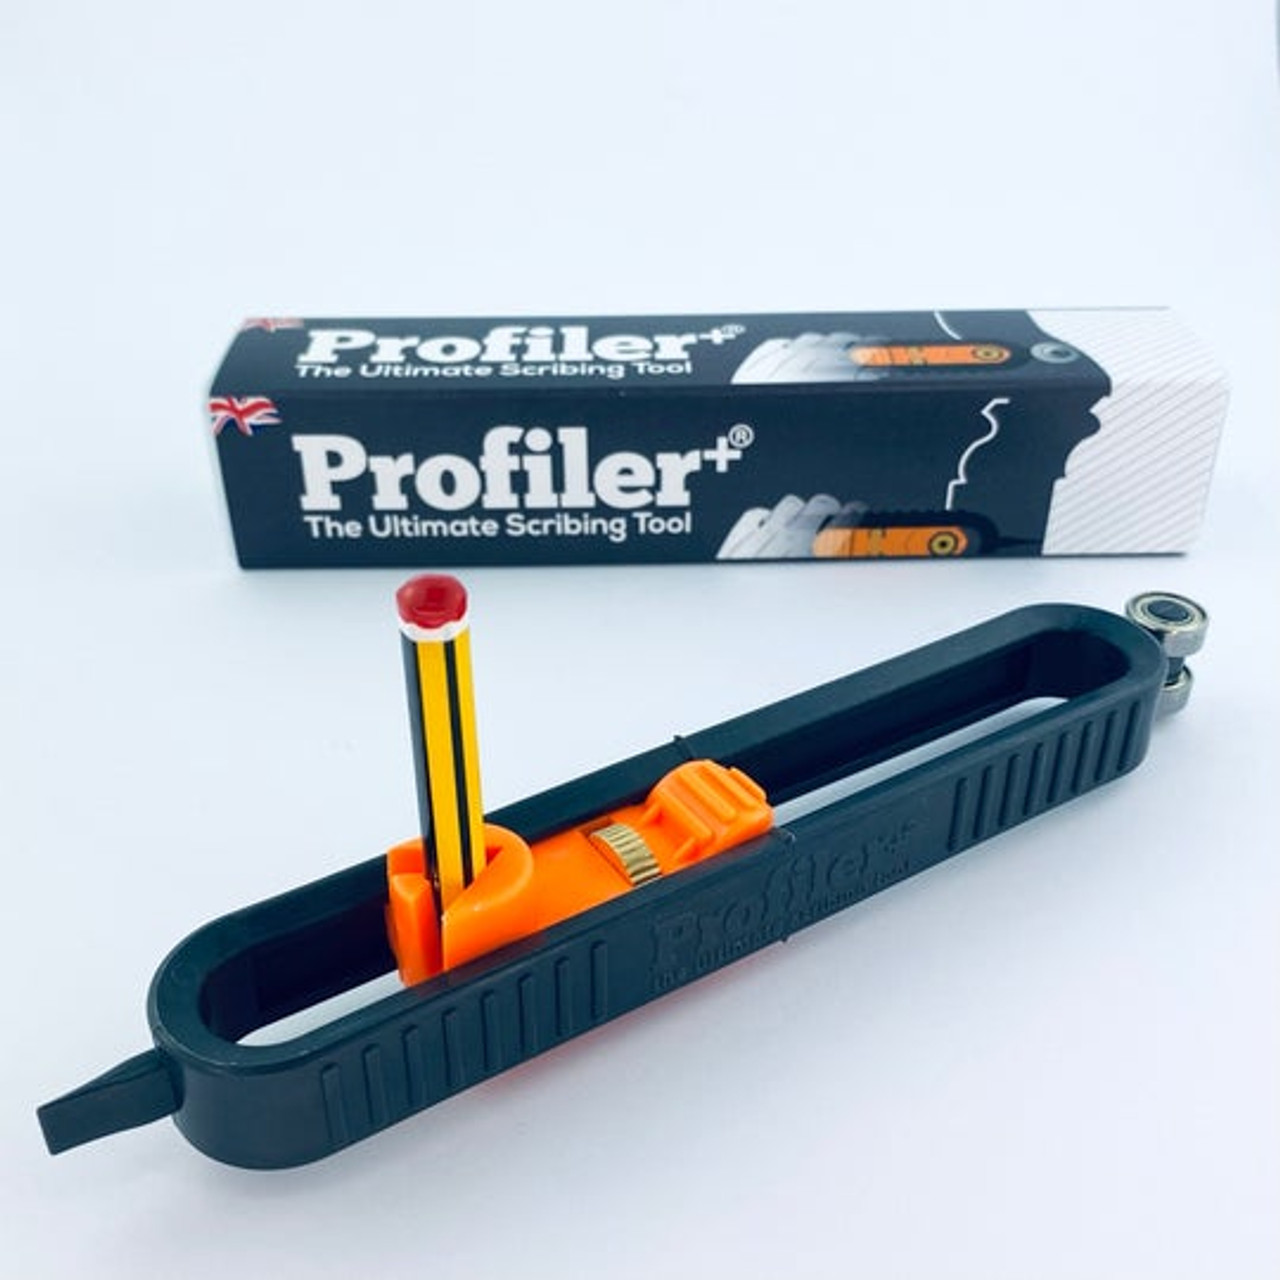 Profiler+, The Ultimate Scribing Tool, Special Purpose